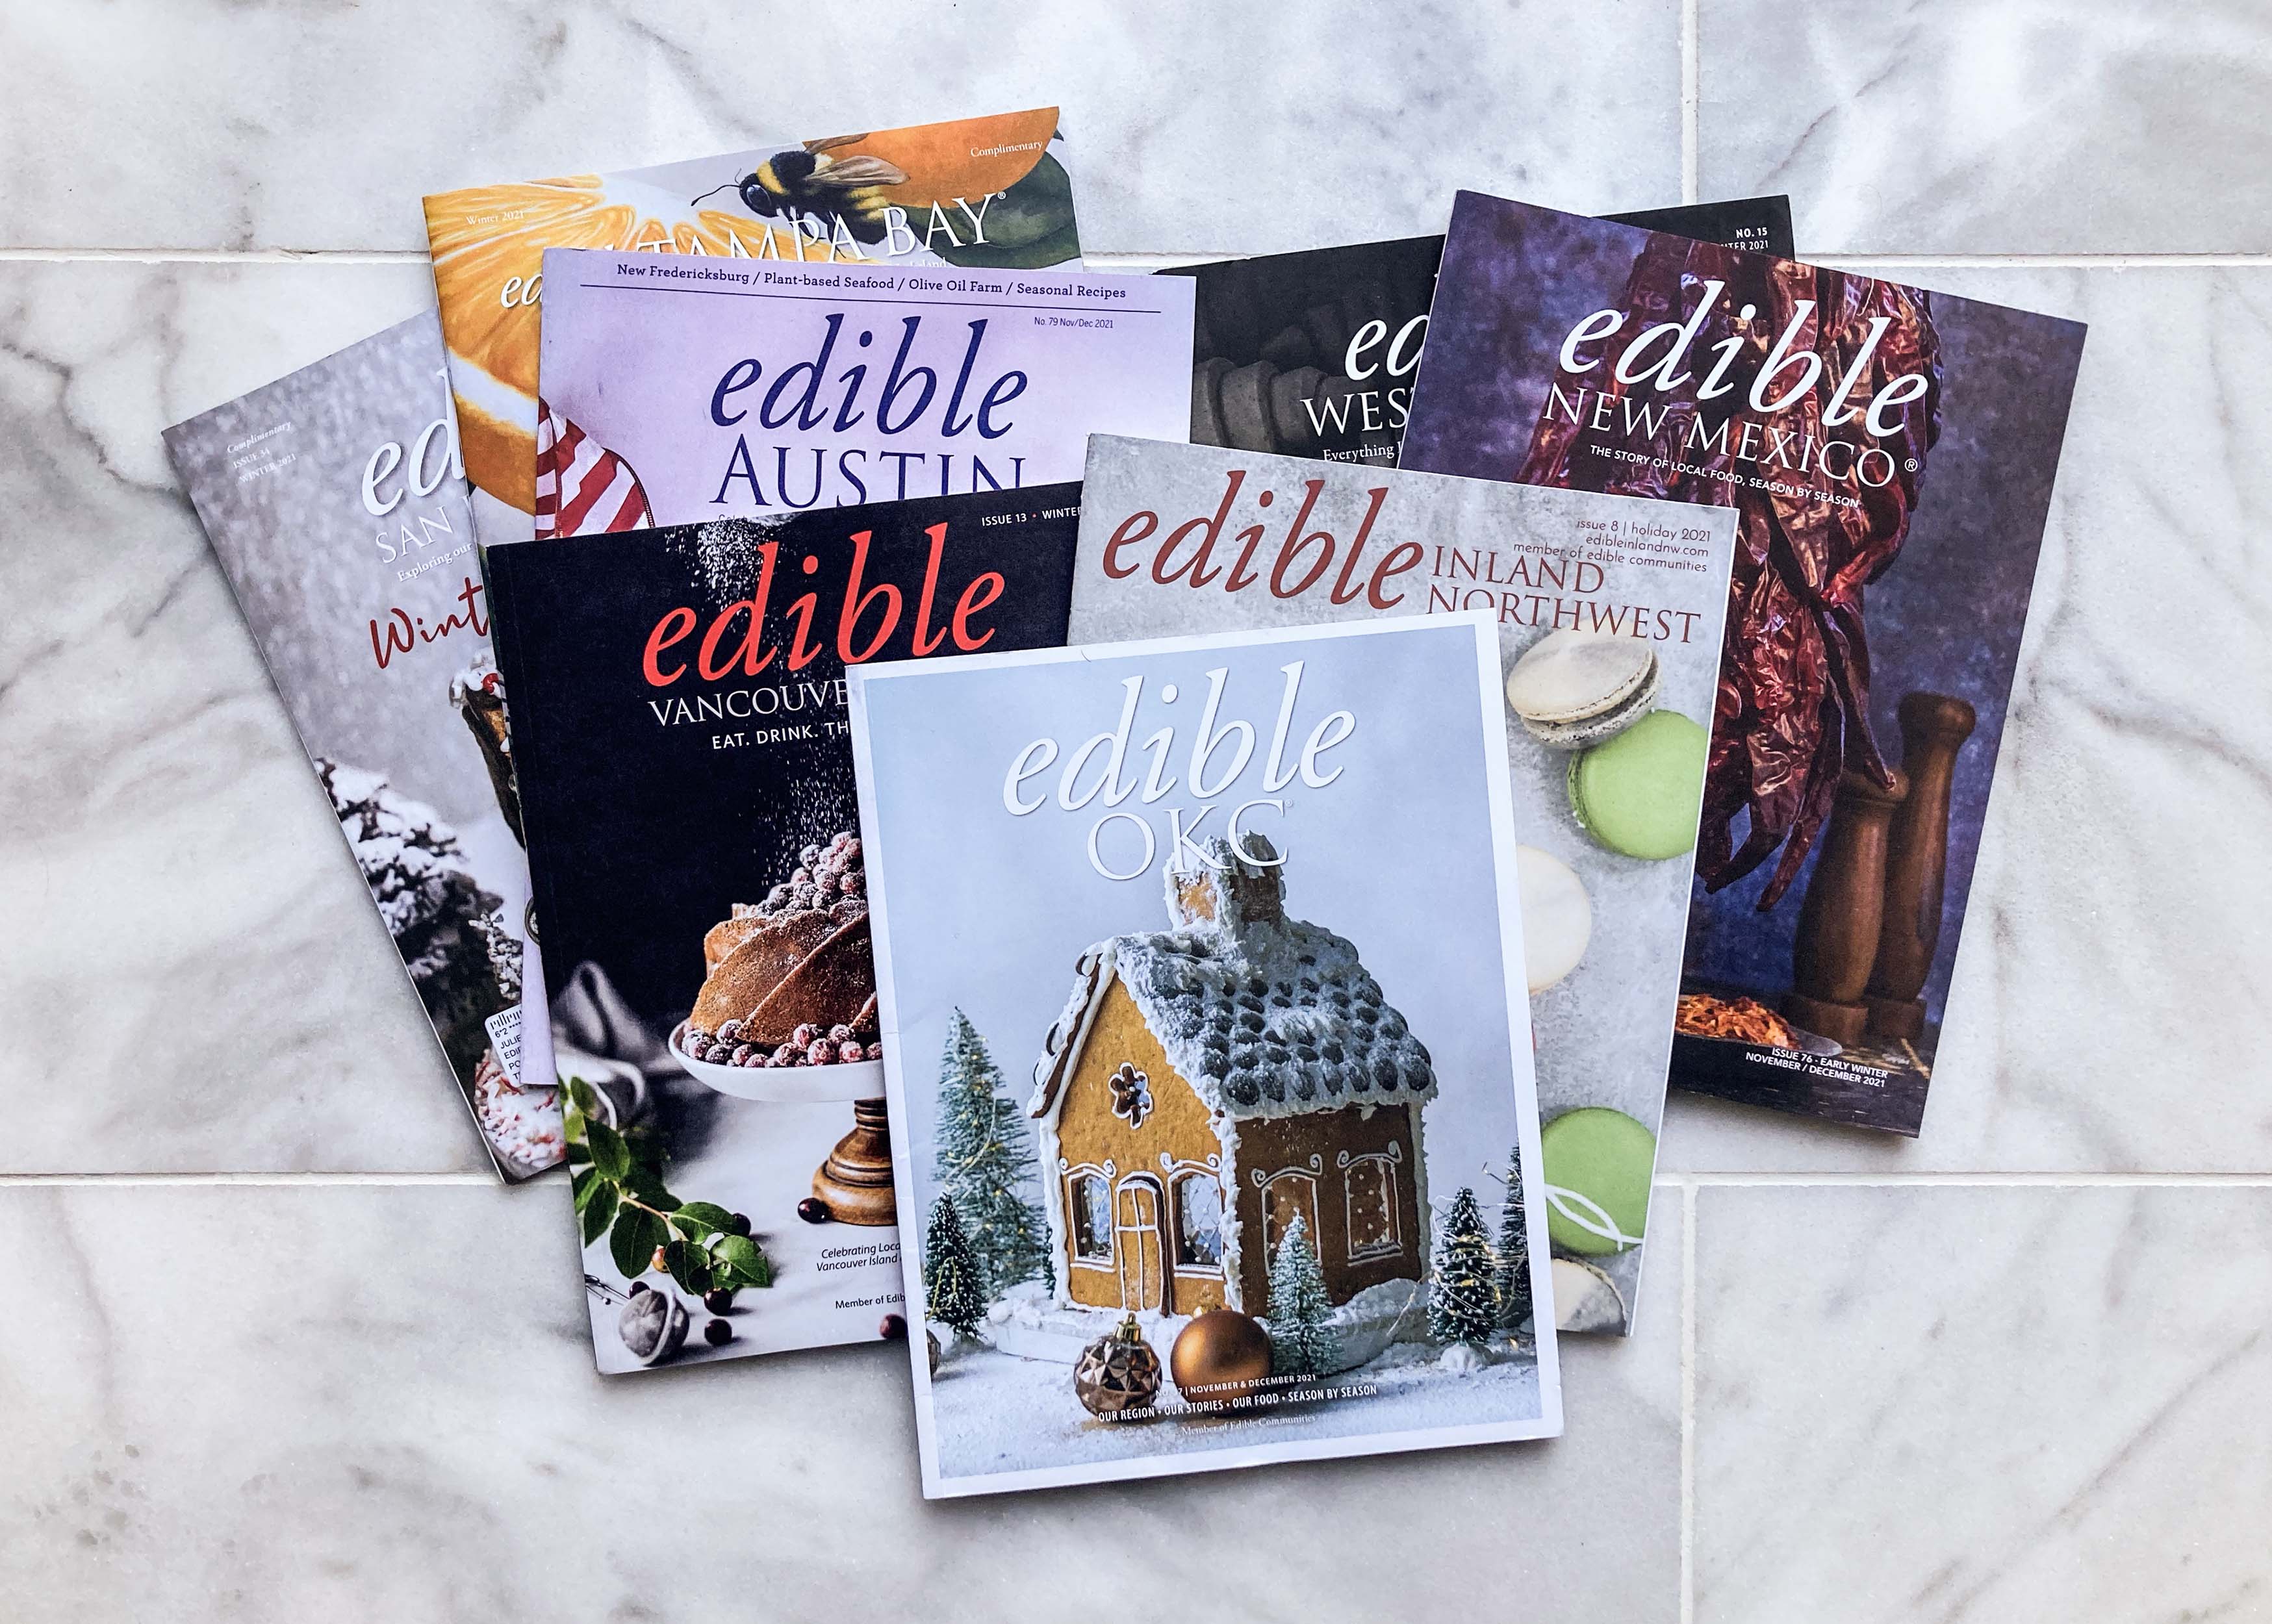 Edible Magazine Subscriptions – Edible Subscriptions